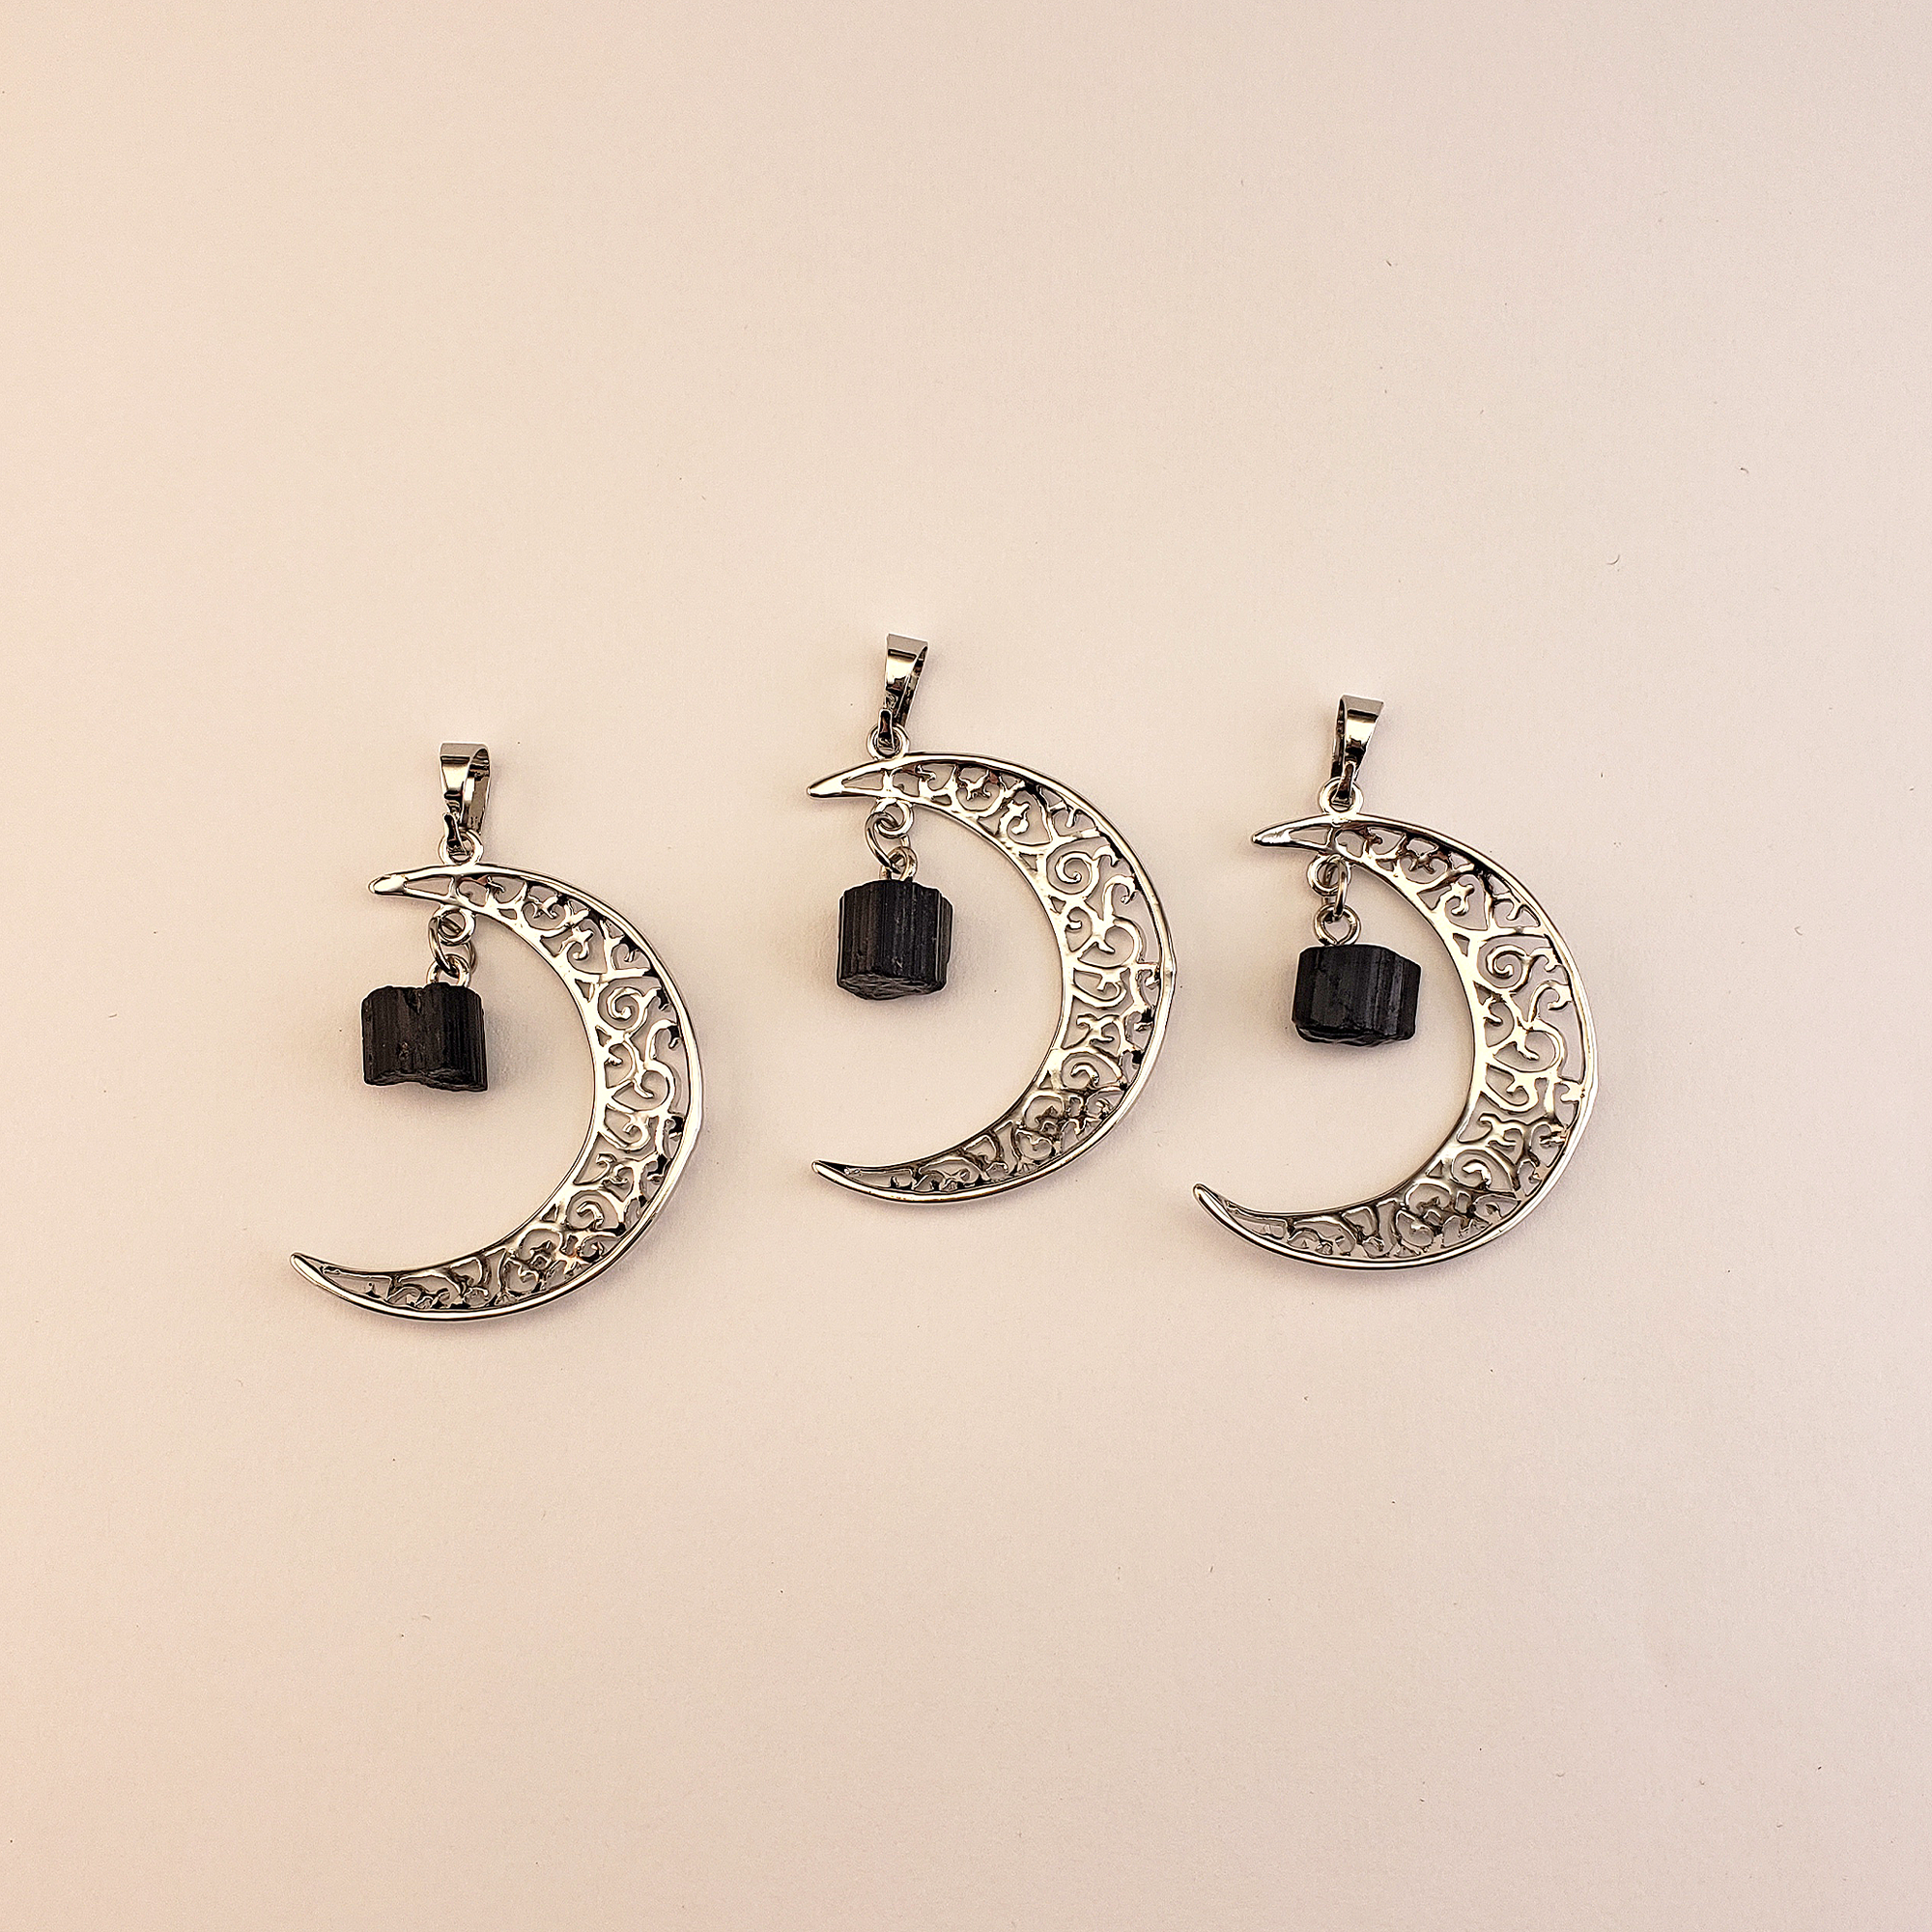 Black Tourmaline Crescent Moon Gemstone Pendant Necklace - Other Side of Pendants